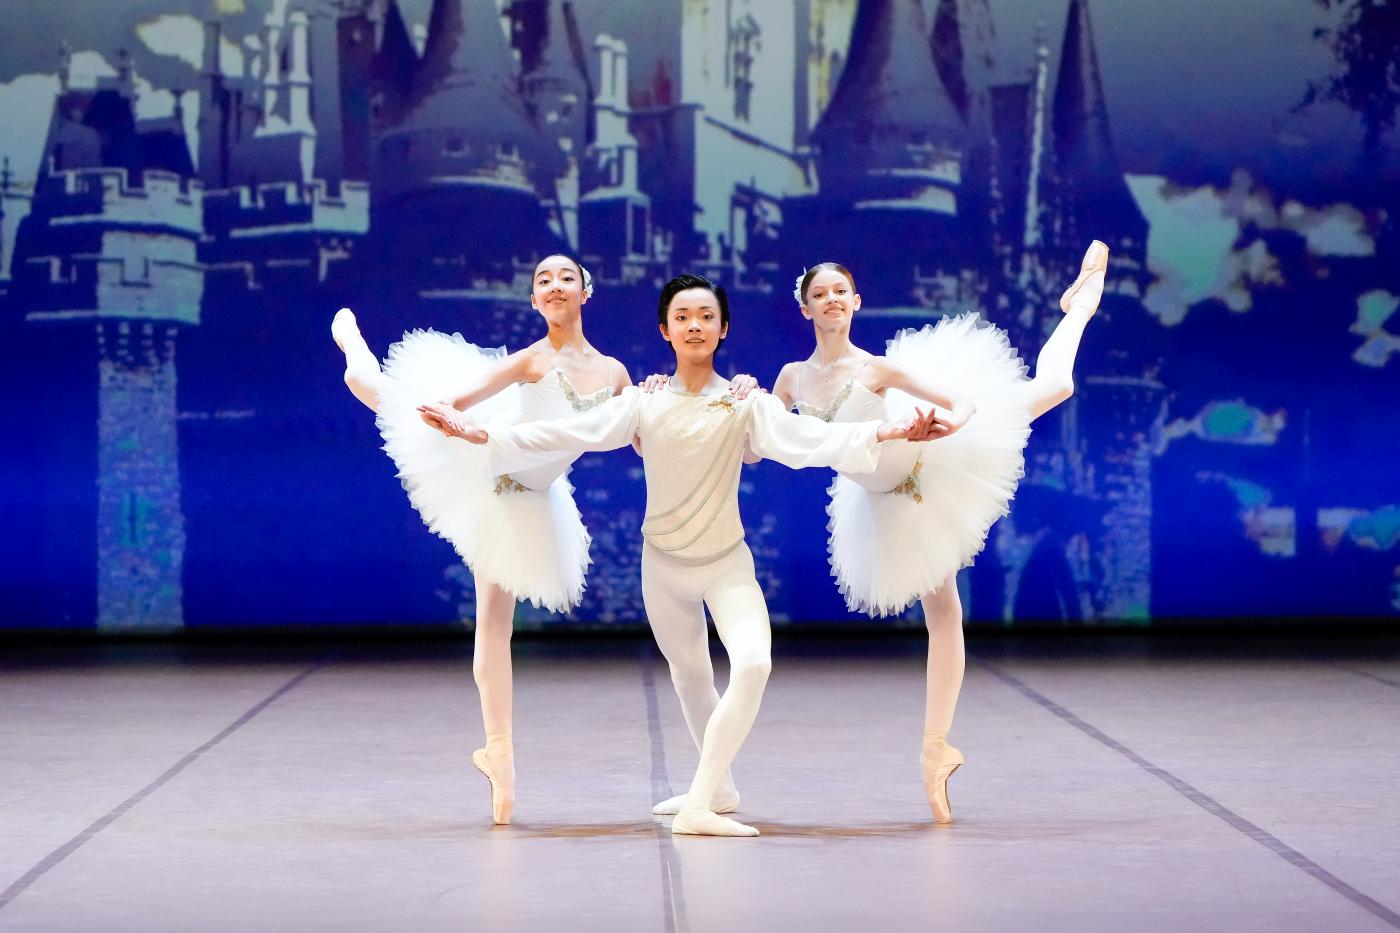 1. R.Suginohara, W.Tohara, and A.Jensen; “The Nutcracker” by M.Petipa, L.Ivanov, and V.Vainonen, John Cranko School 2023 © R.Novitzky / Stuttgart Ballet